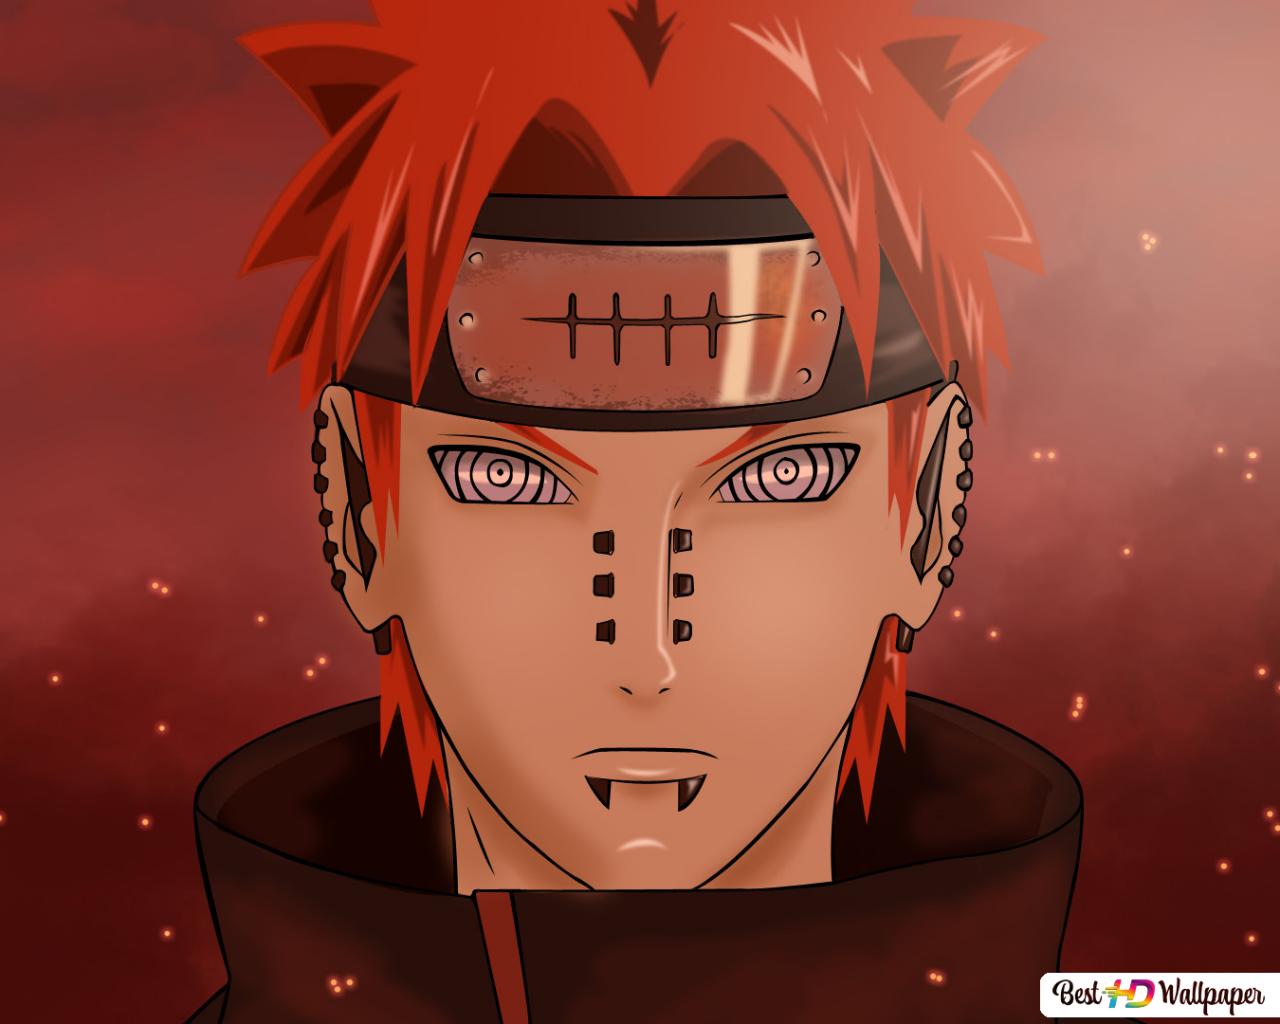 Naruto Shippuden HD wallpaper download